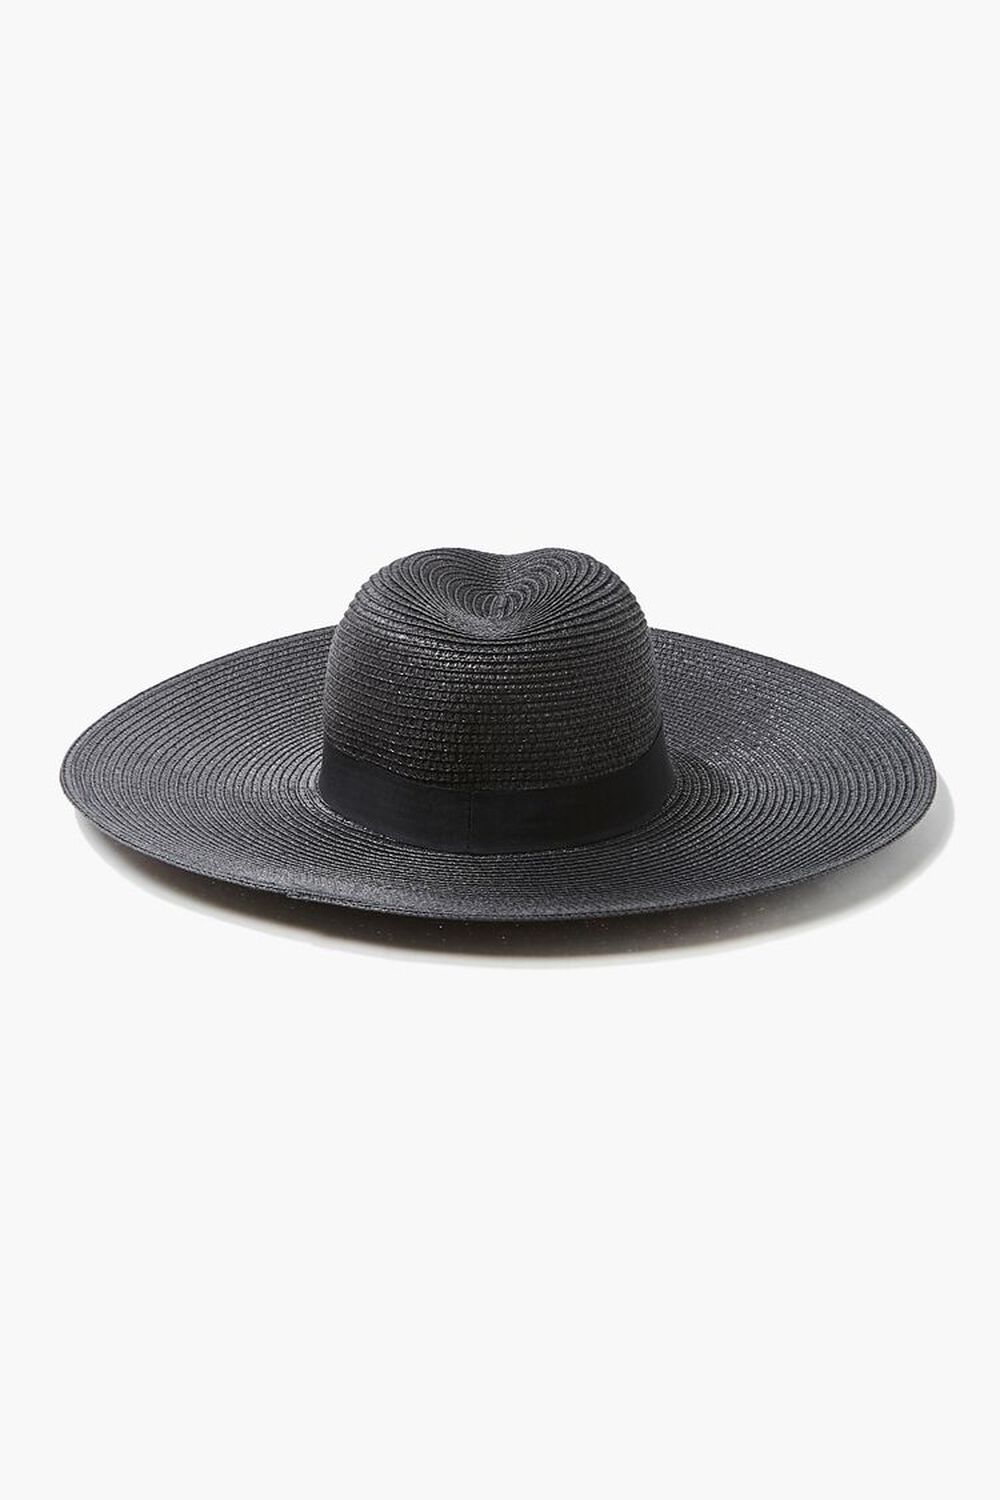 Faux Straw Panama Hat, image 3